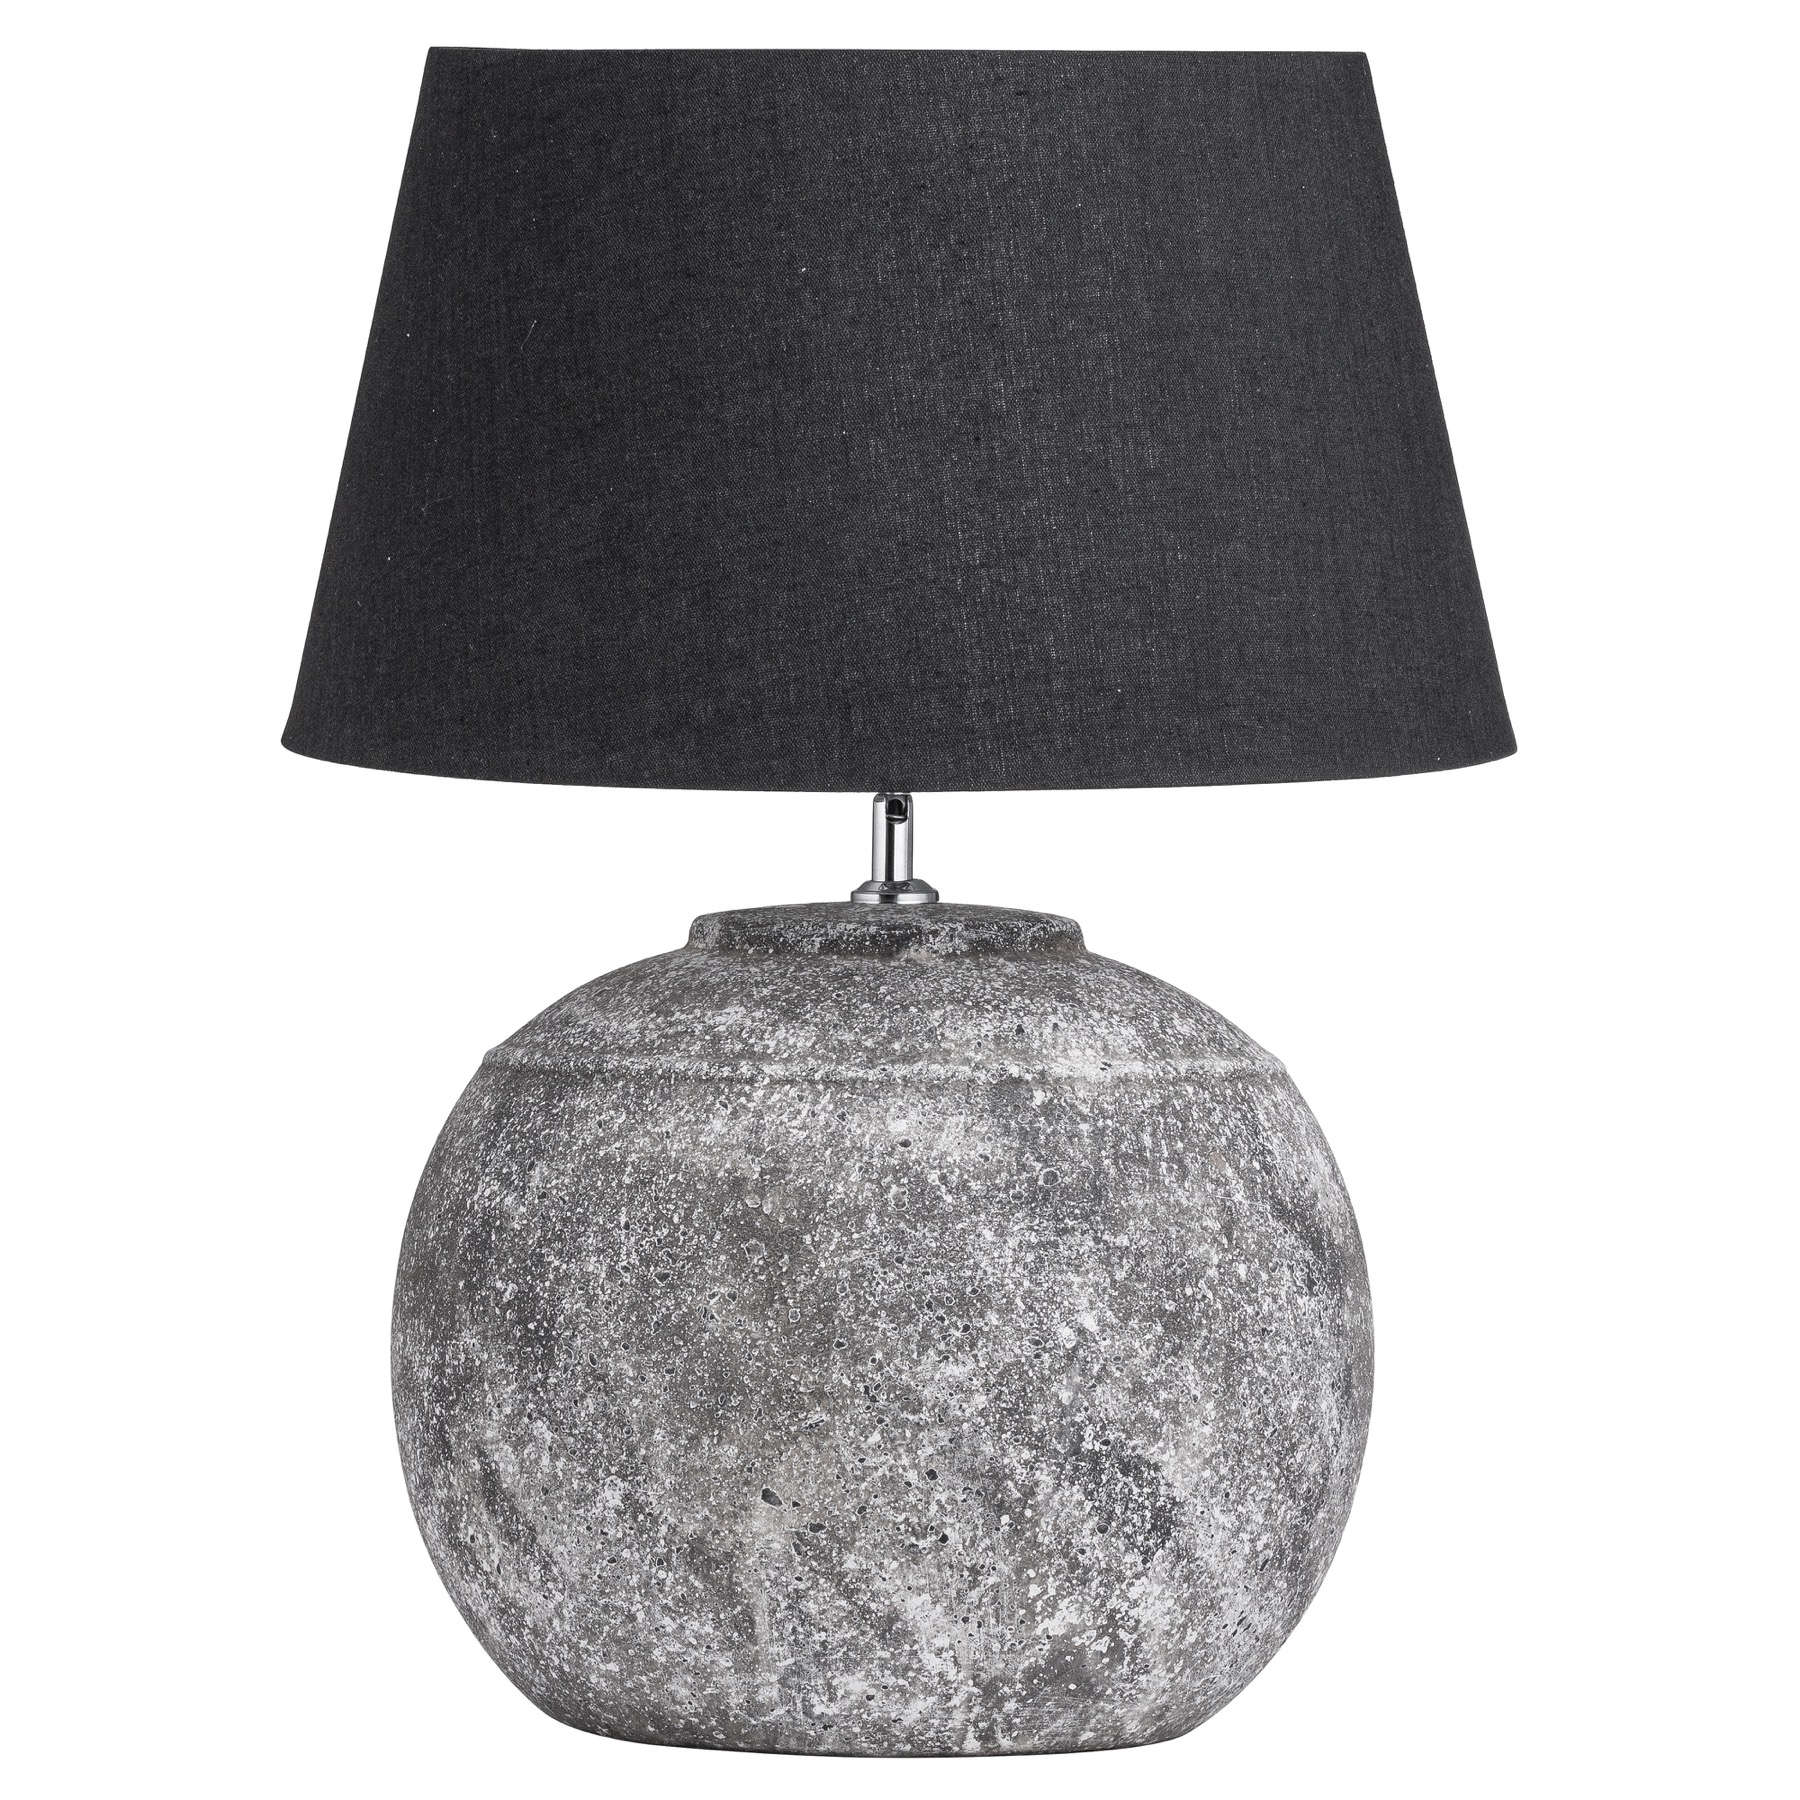 Regola Aged Stone Ceramic Table Lamp - Image 1